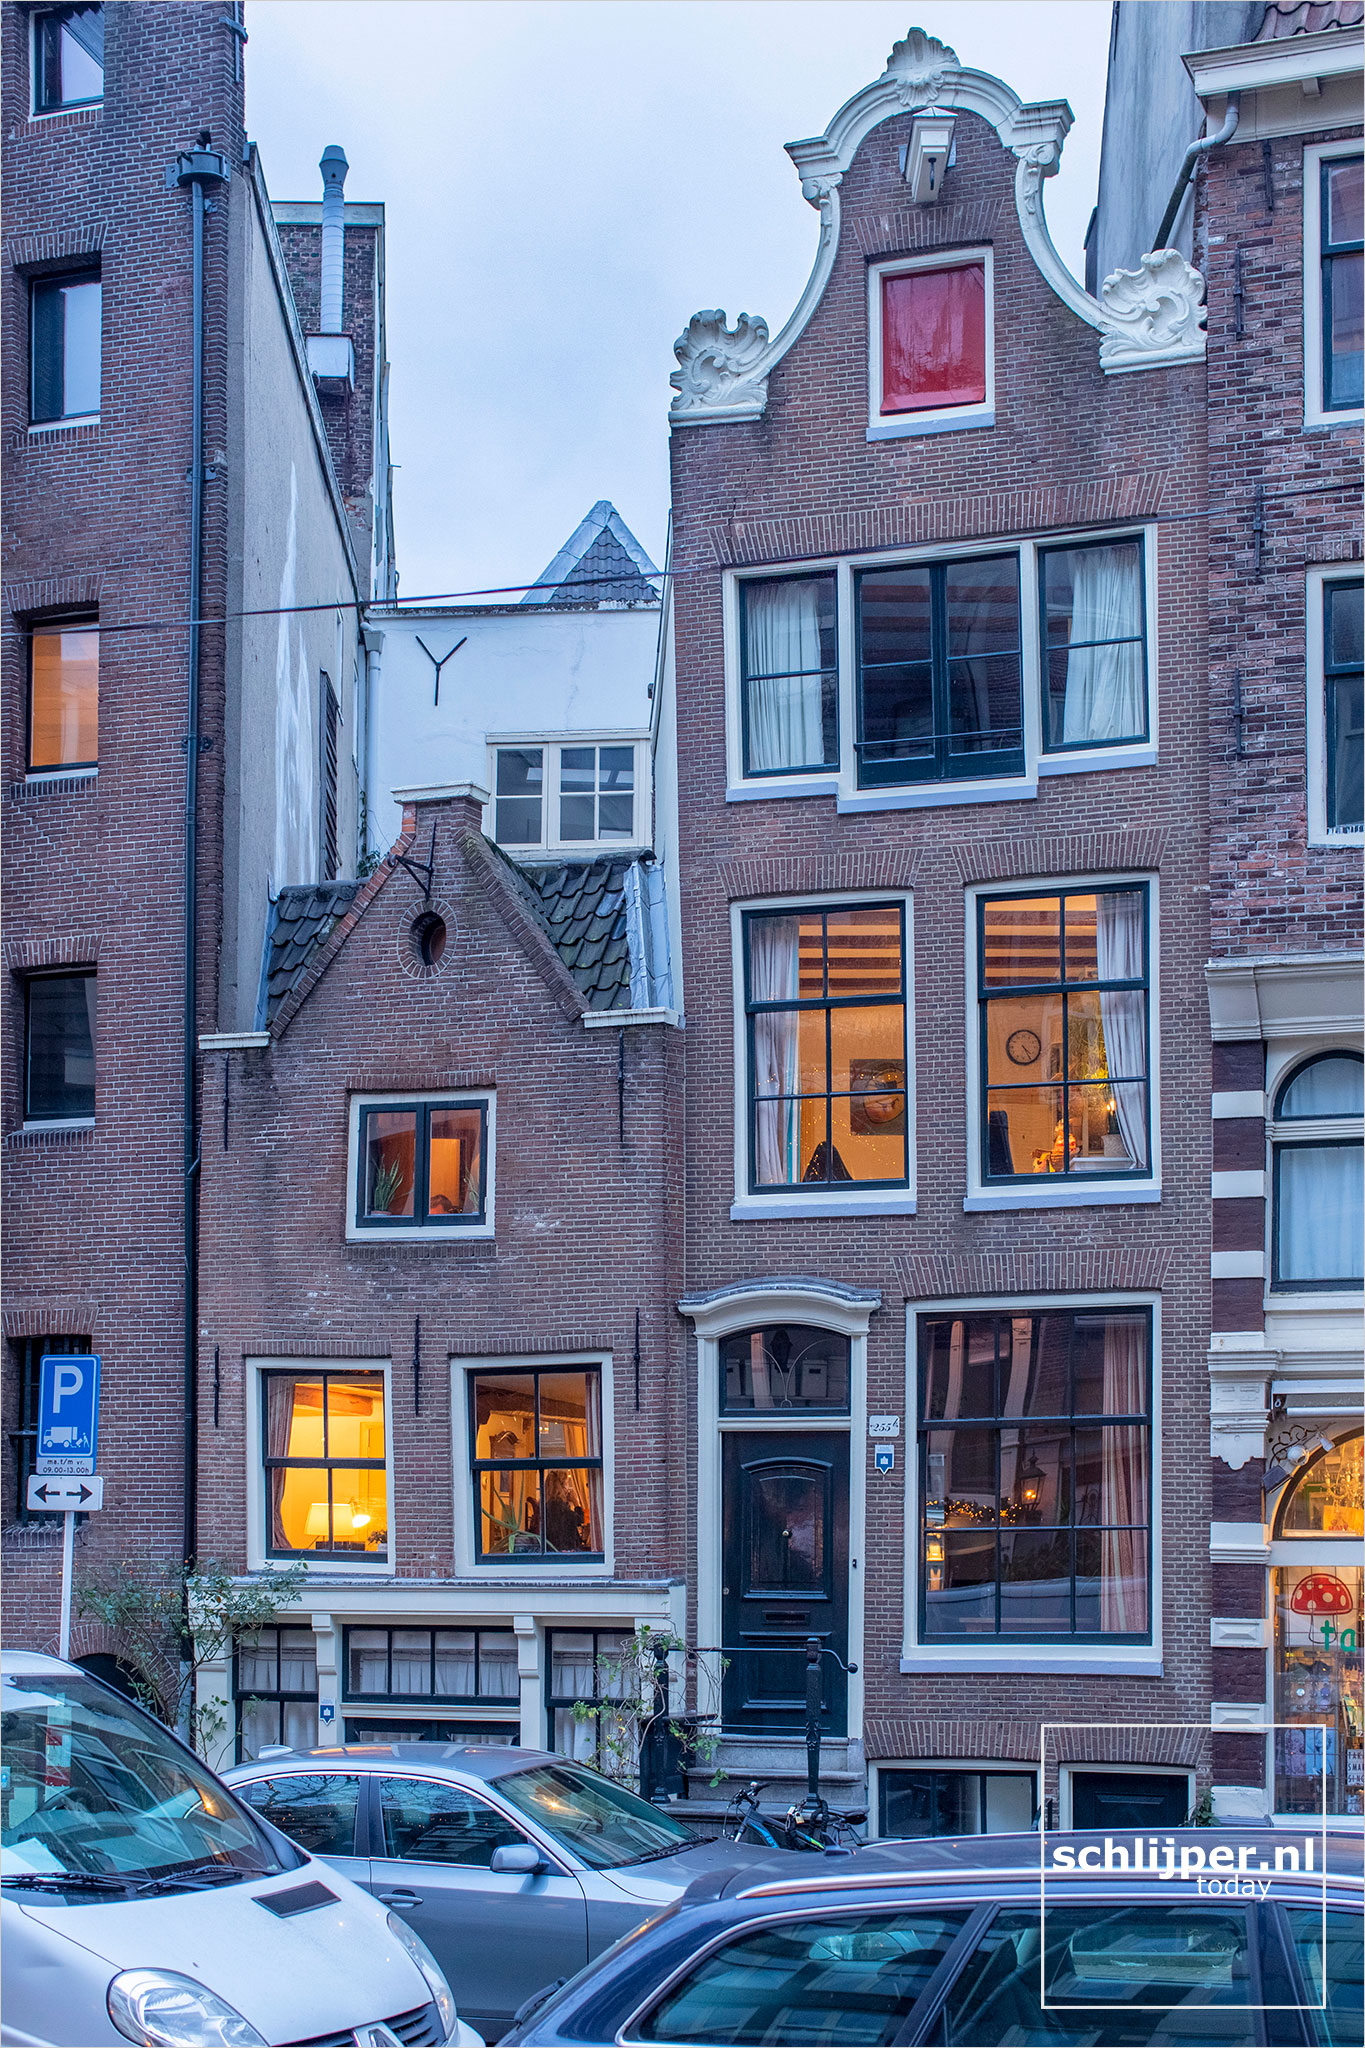 The Netherlands, Amsterdam, 4 januari 2021